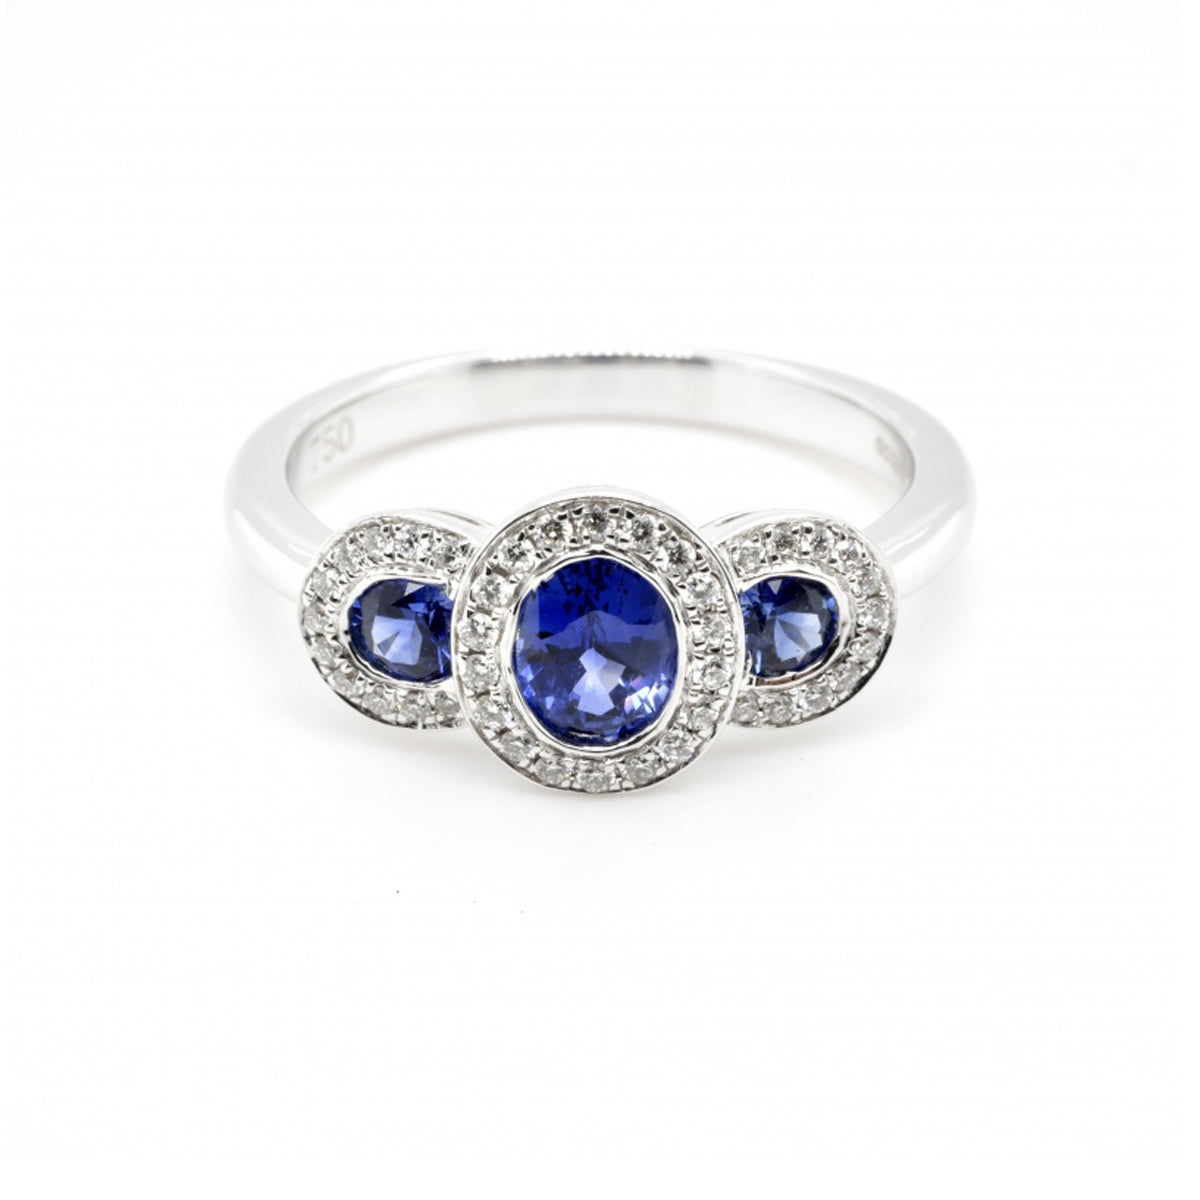 18ct White Gold Sapphire Diamond 3-Stone Halo Ring - Size N